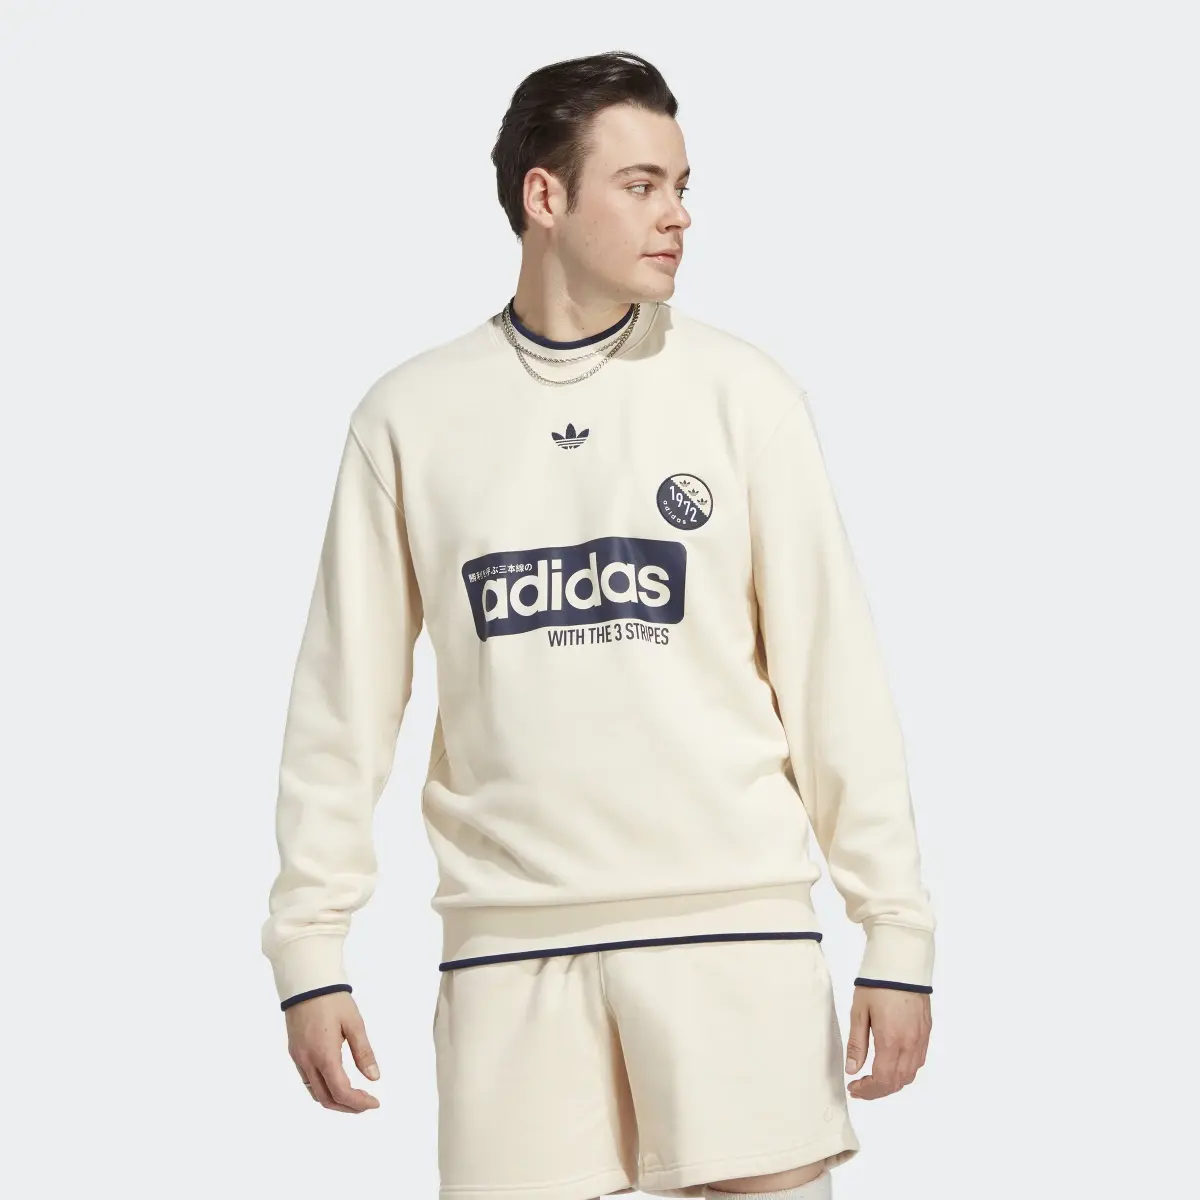 Adidas Sweat-shirt ras-du-cou Blokepop. 2